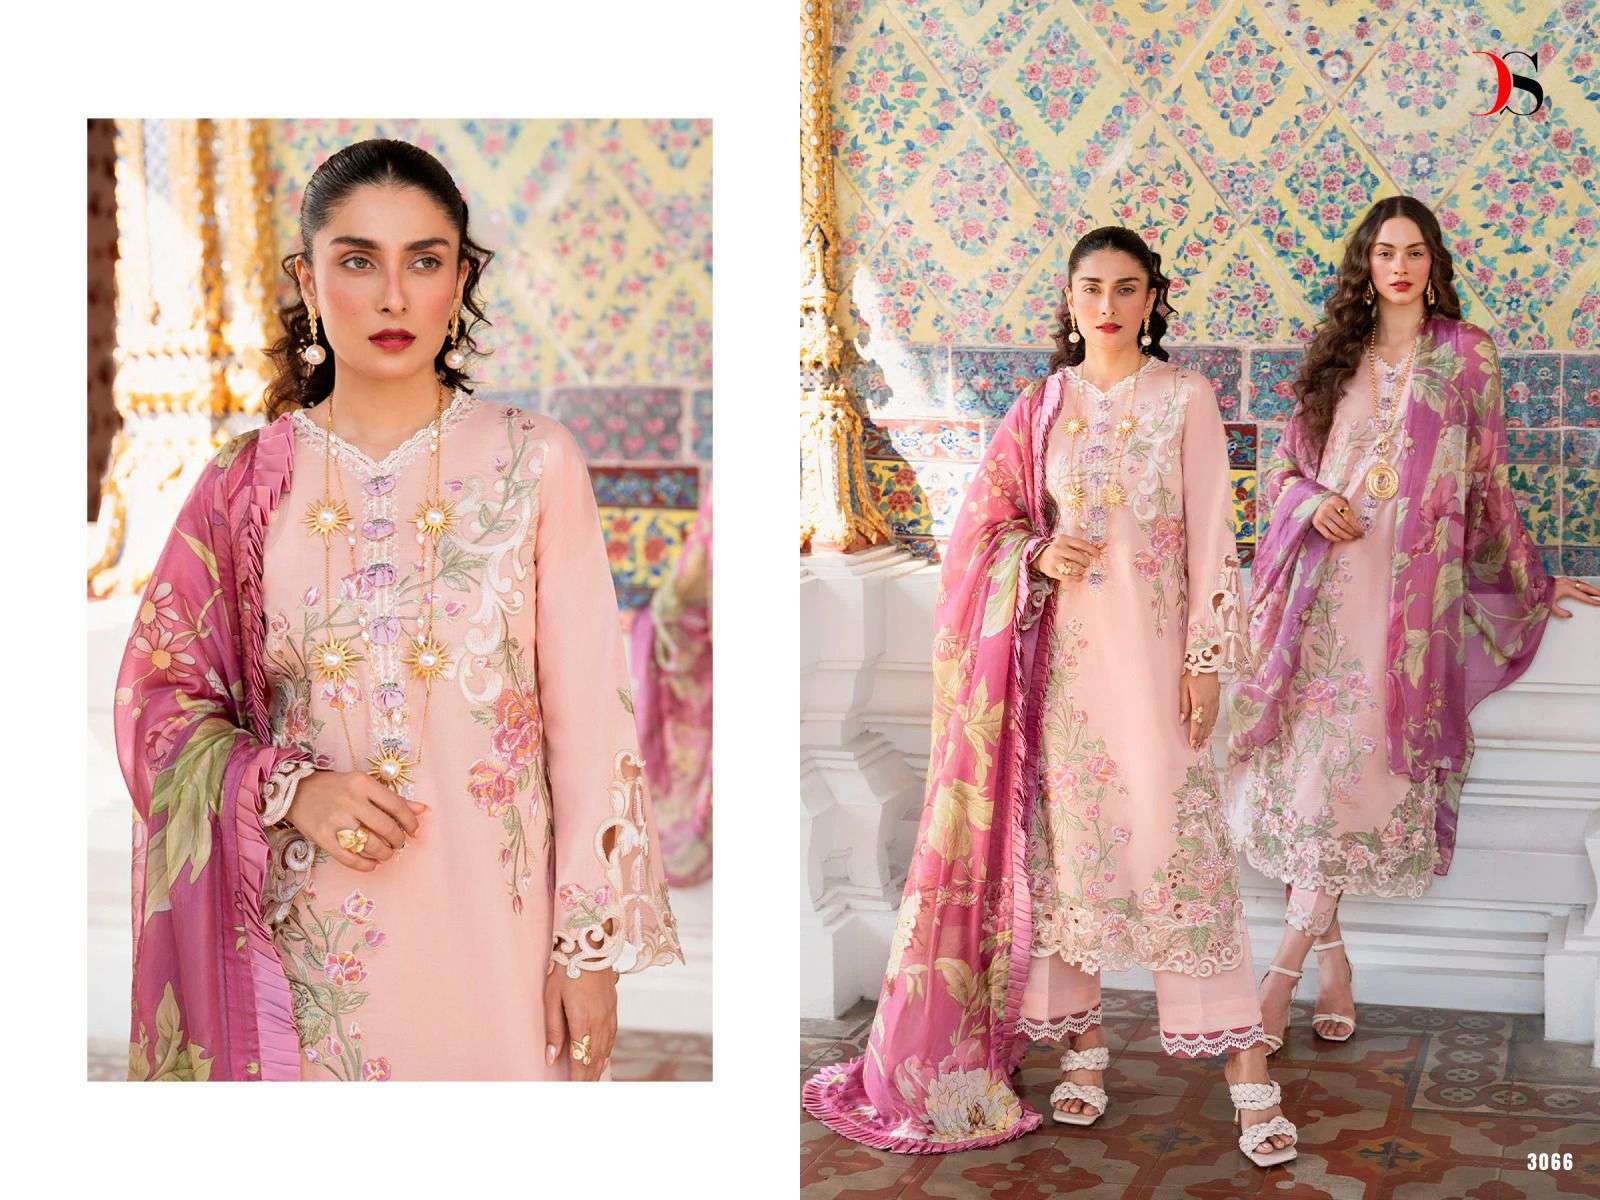 deepsy suits mushq vol-23 3061-3066 series stylish designer salwar kameez catalogue manufacturer surat 